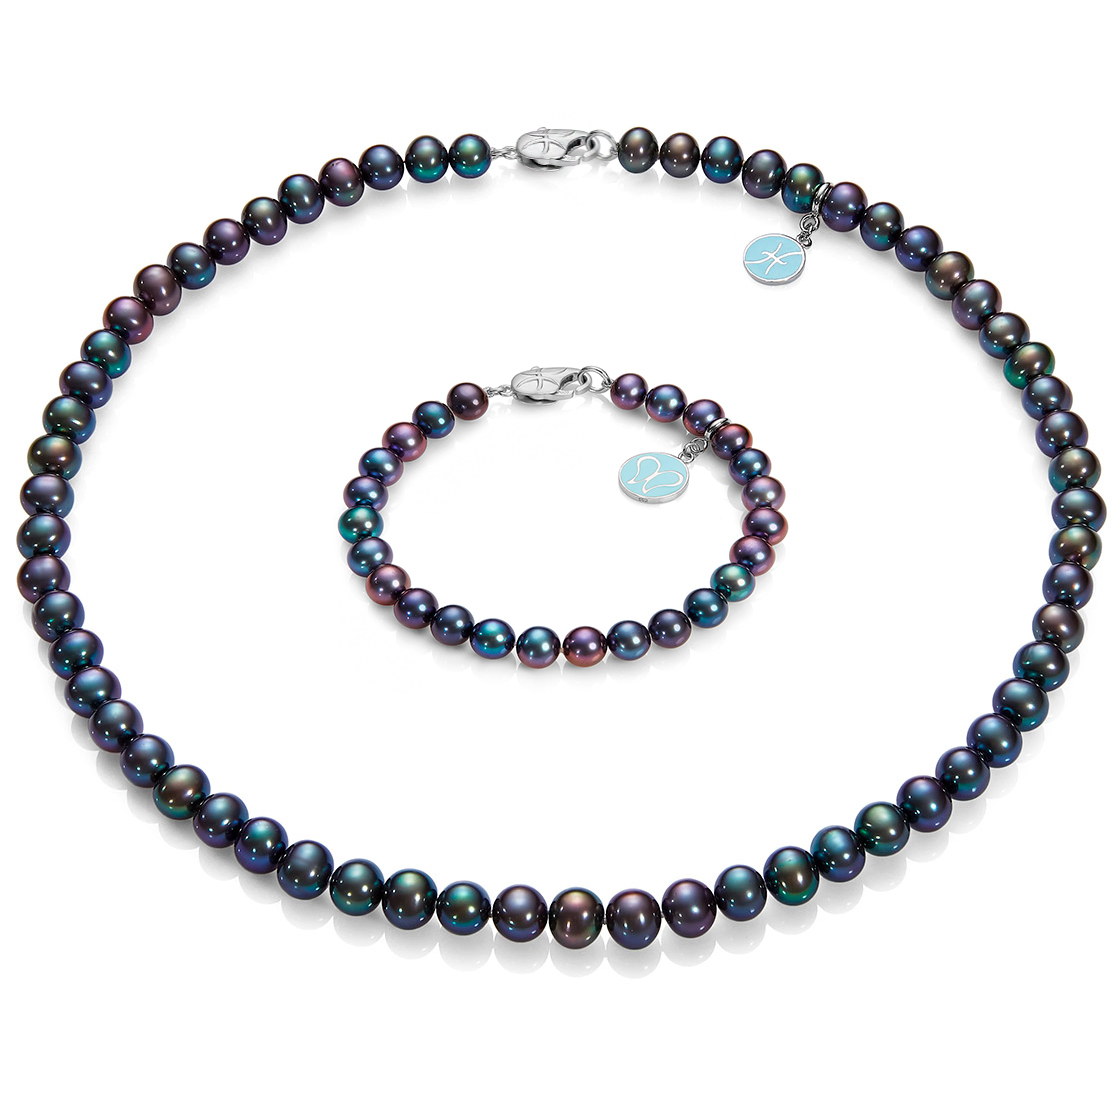 Ожерелье и браслет из жемчуга цвета павлин